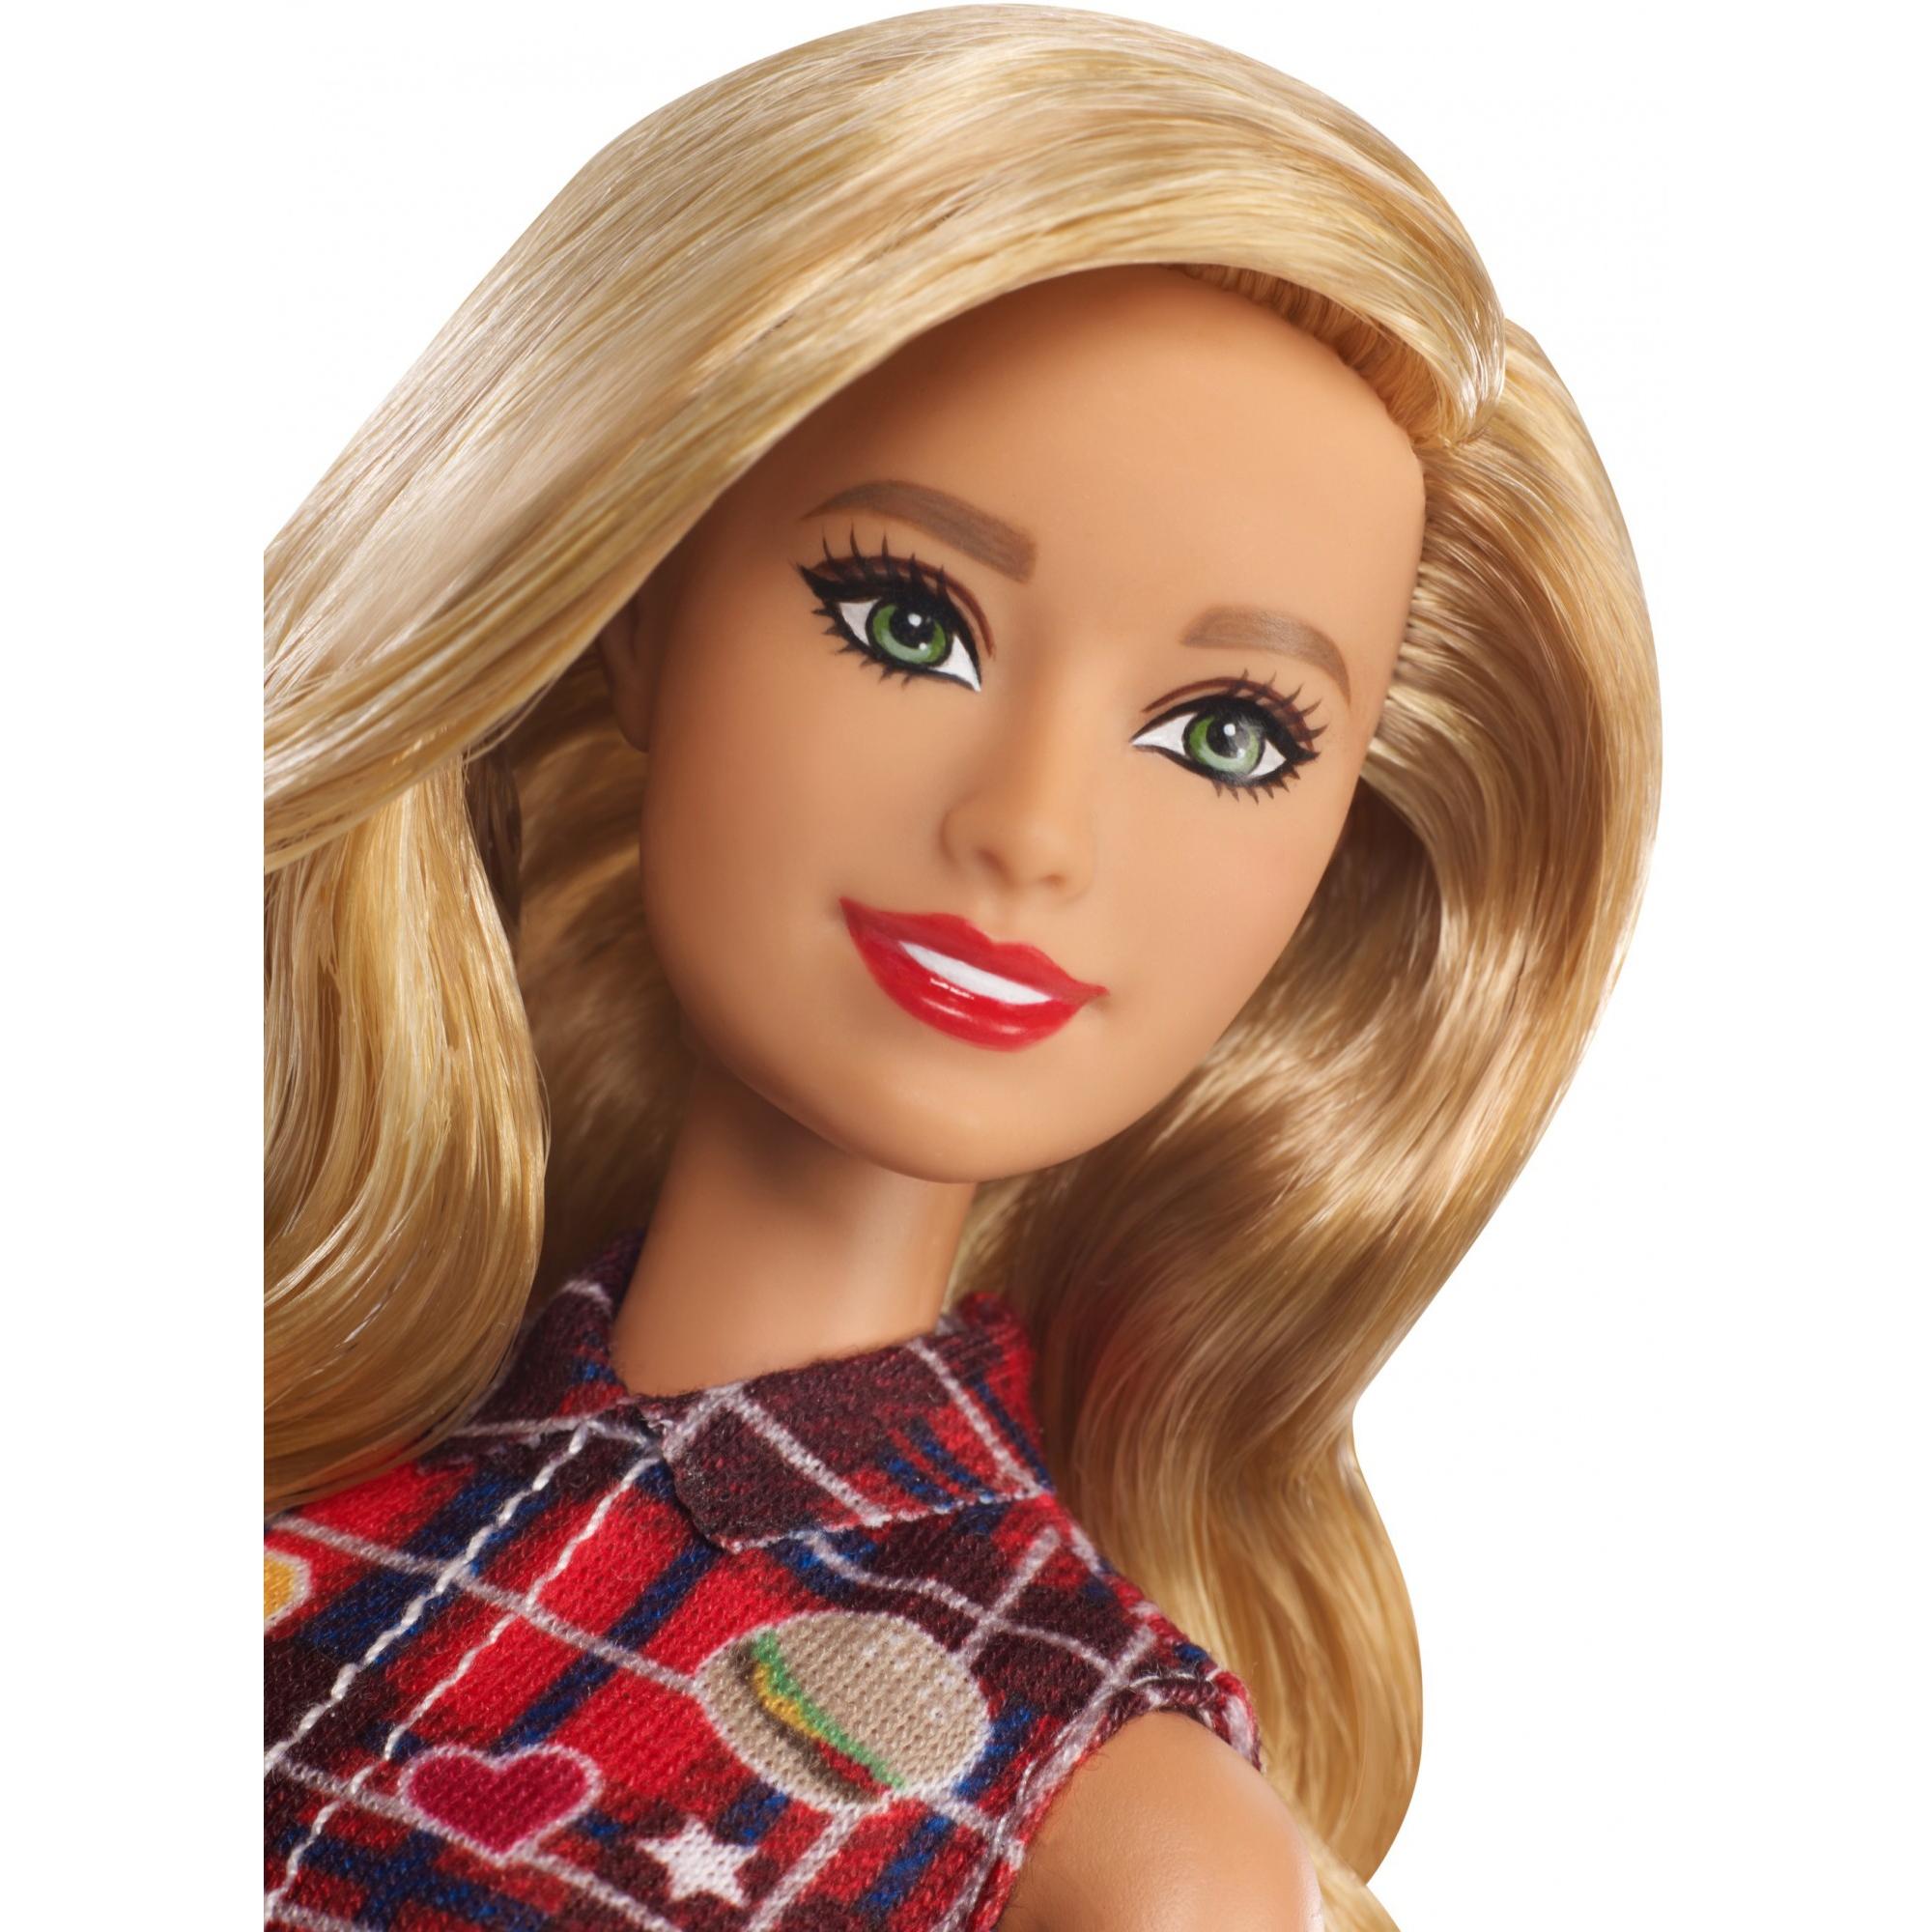 Barbie Fashionistas Doll, Original Body Type with Plaid Dress - image 3 of 7